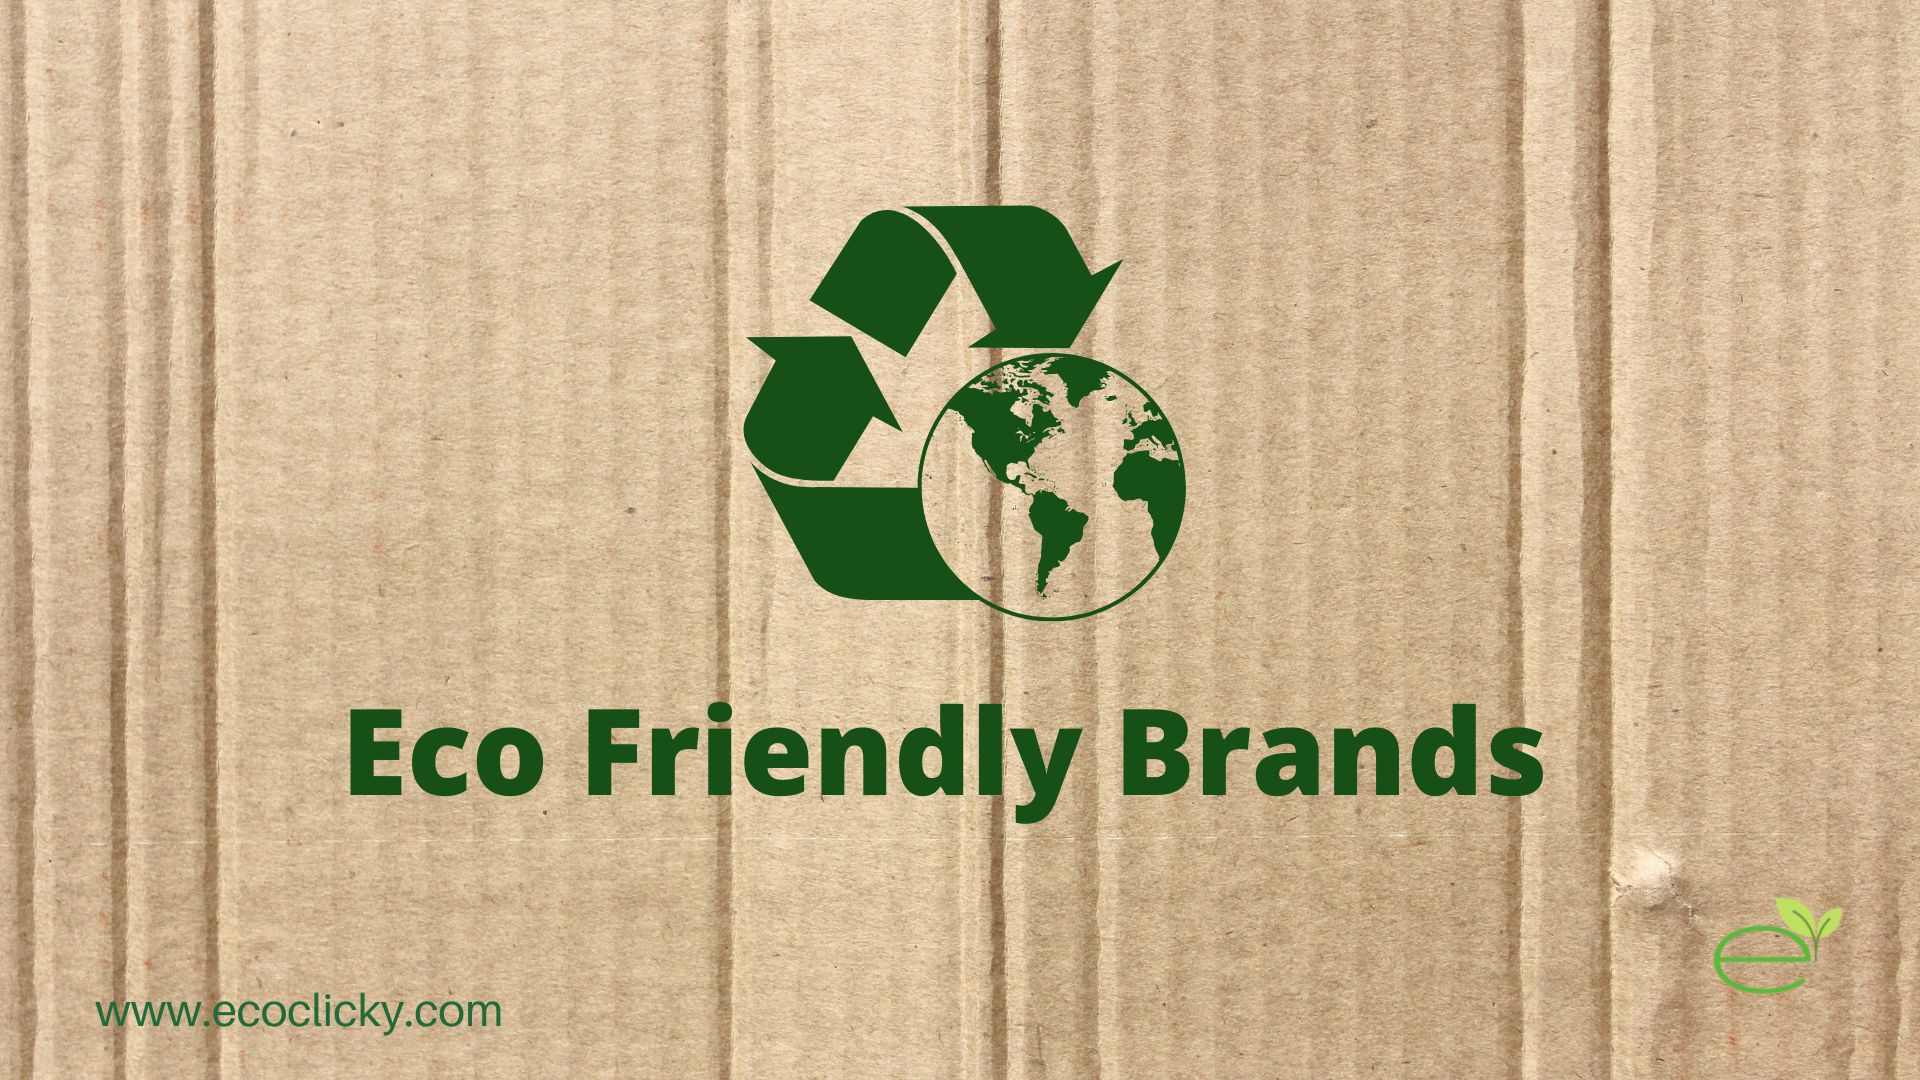 Top 5 Eco-friendly Brands in 2023